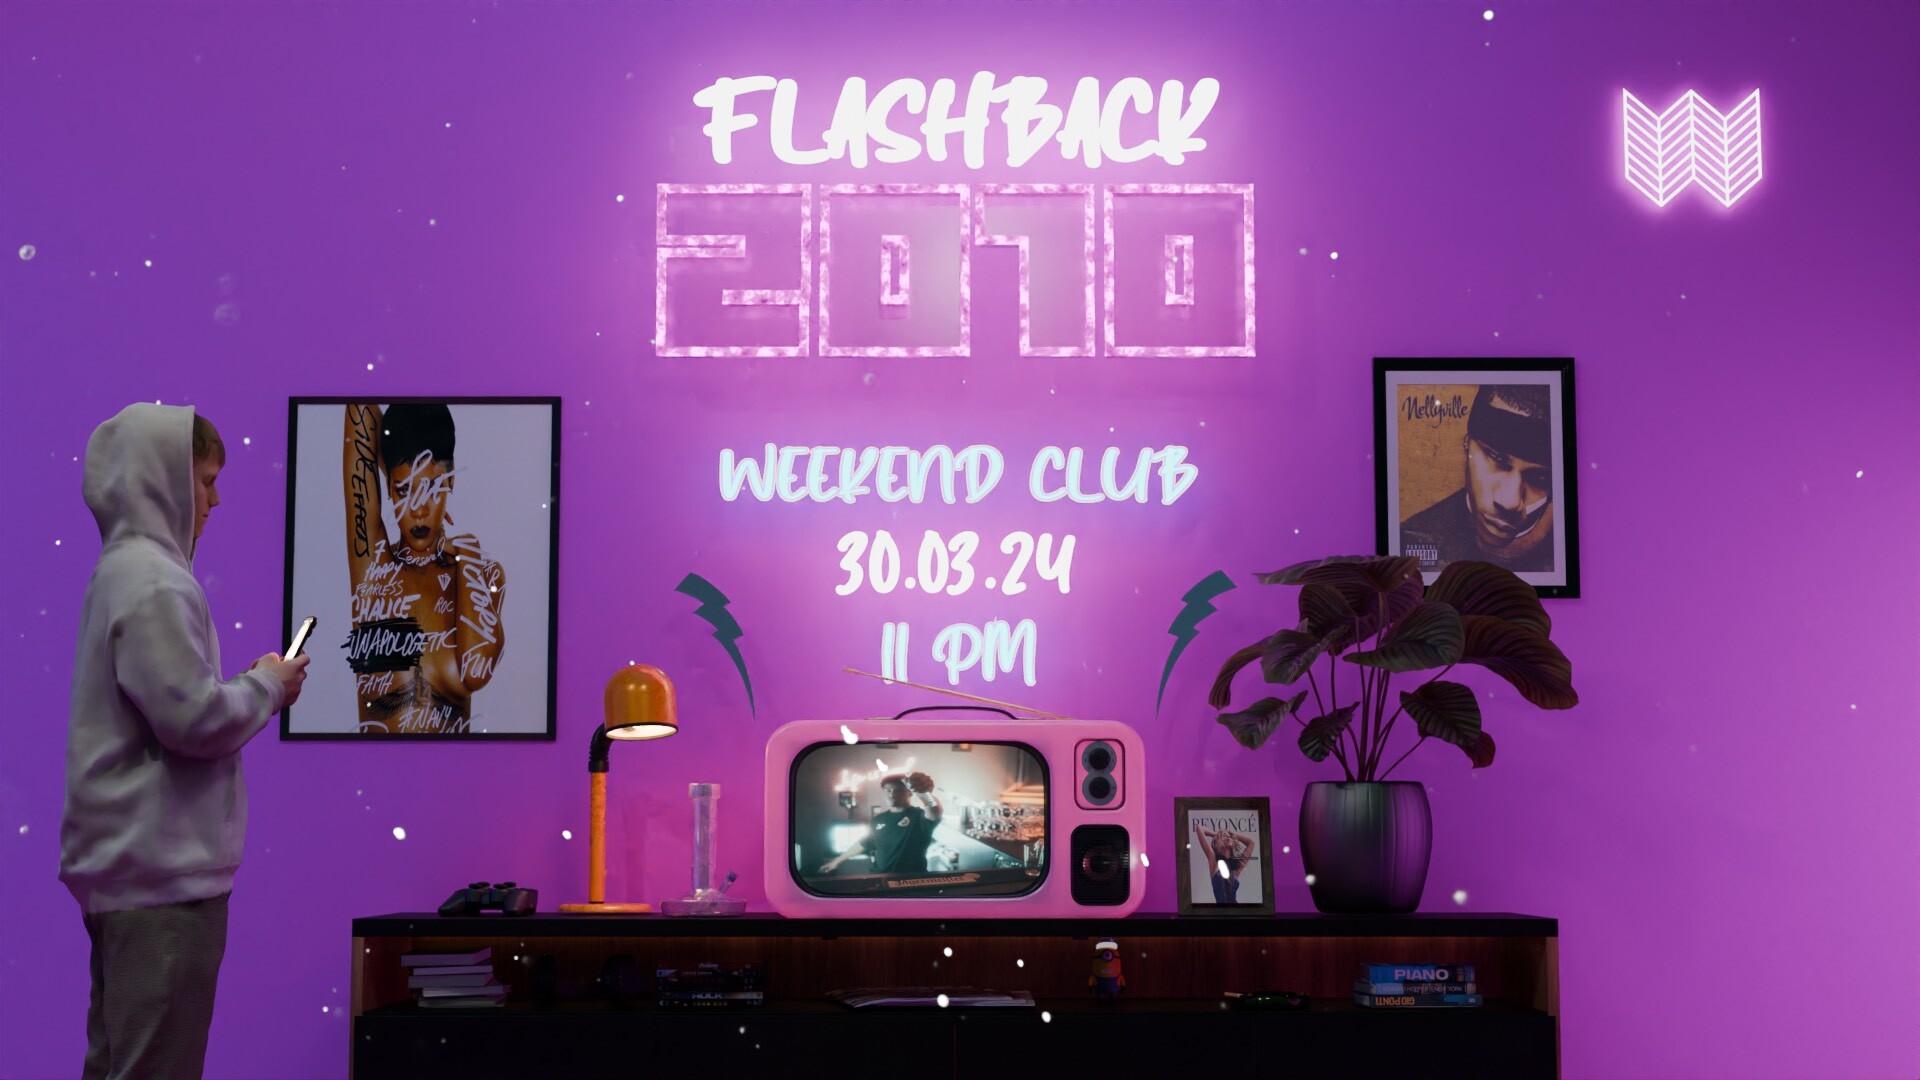 Club Weekend 30.03.2024 Flashback 2010 - Fiesta